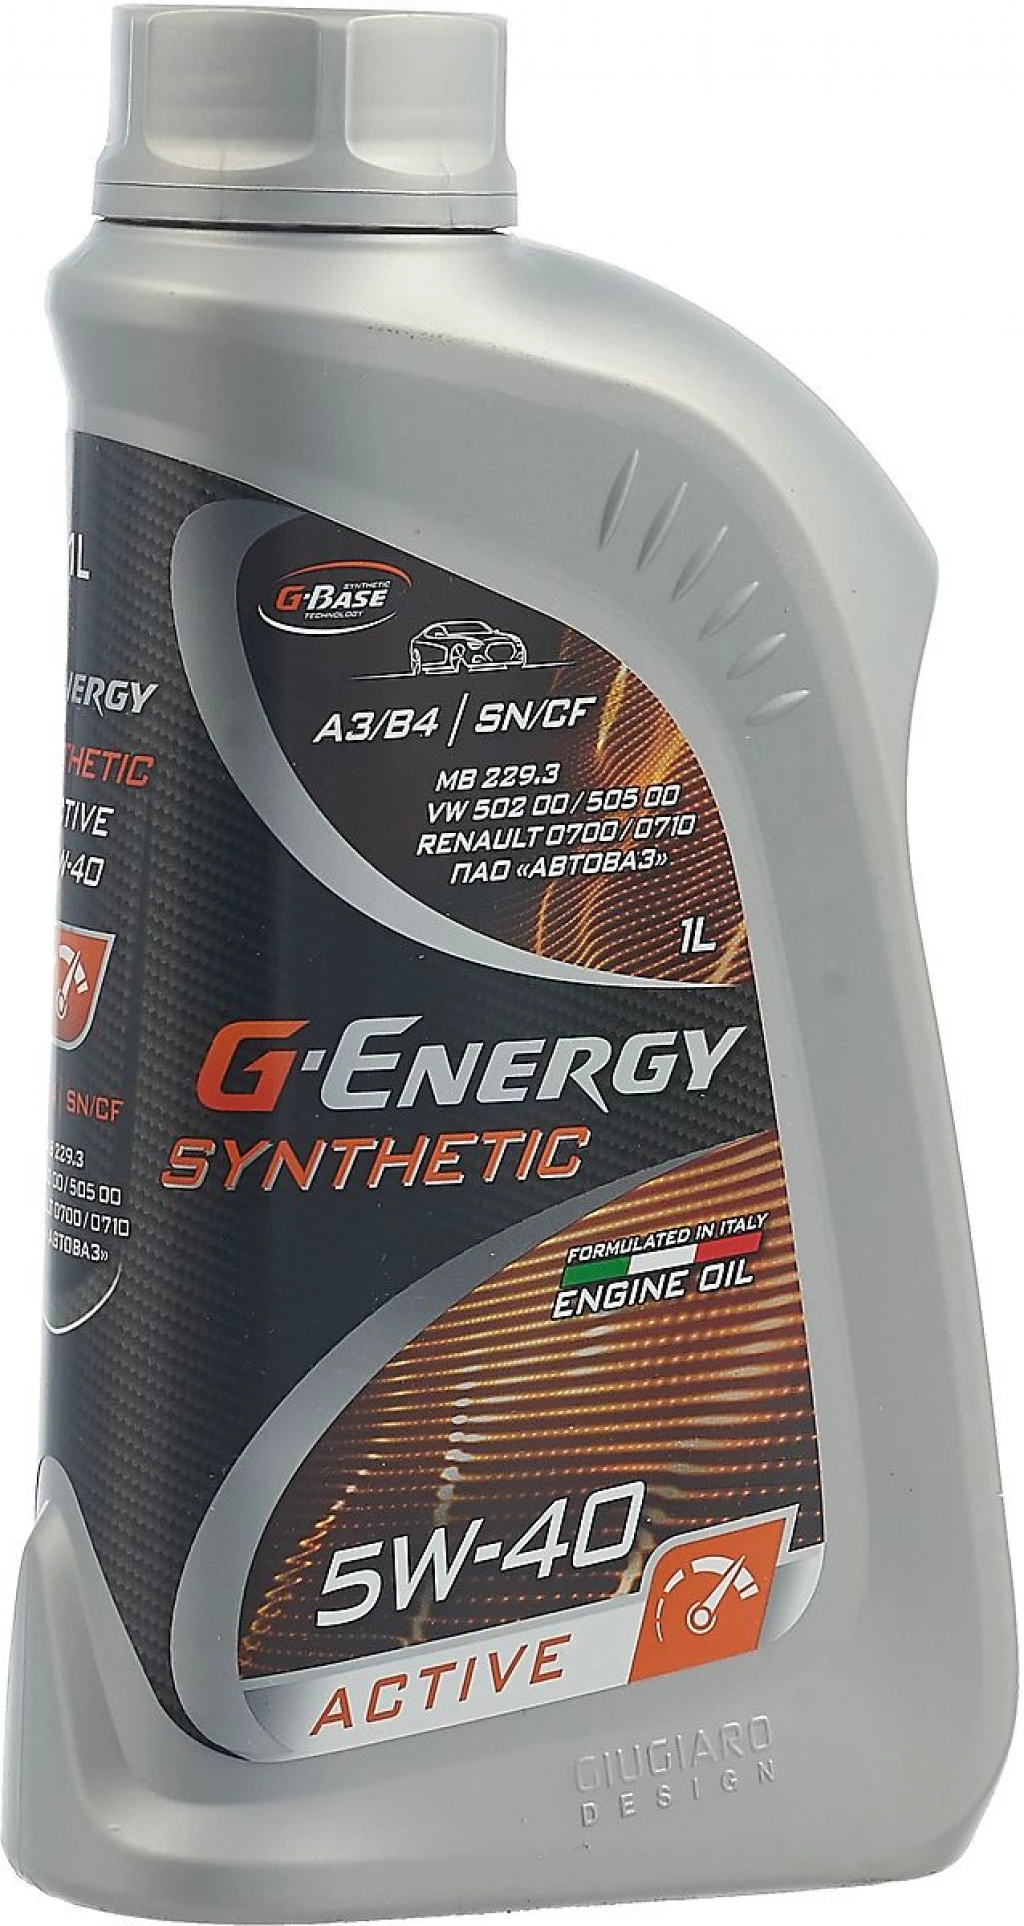 Моторное масло G-Energy Synthetic Active 5W-40 синтетическое 1 л